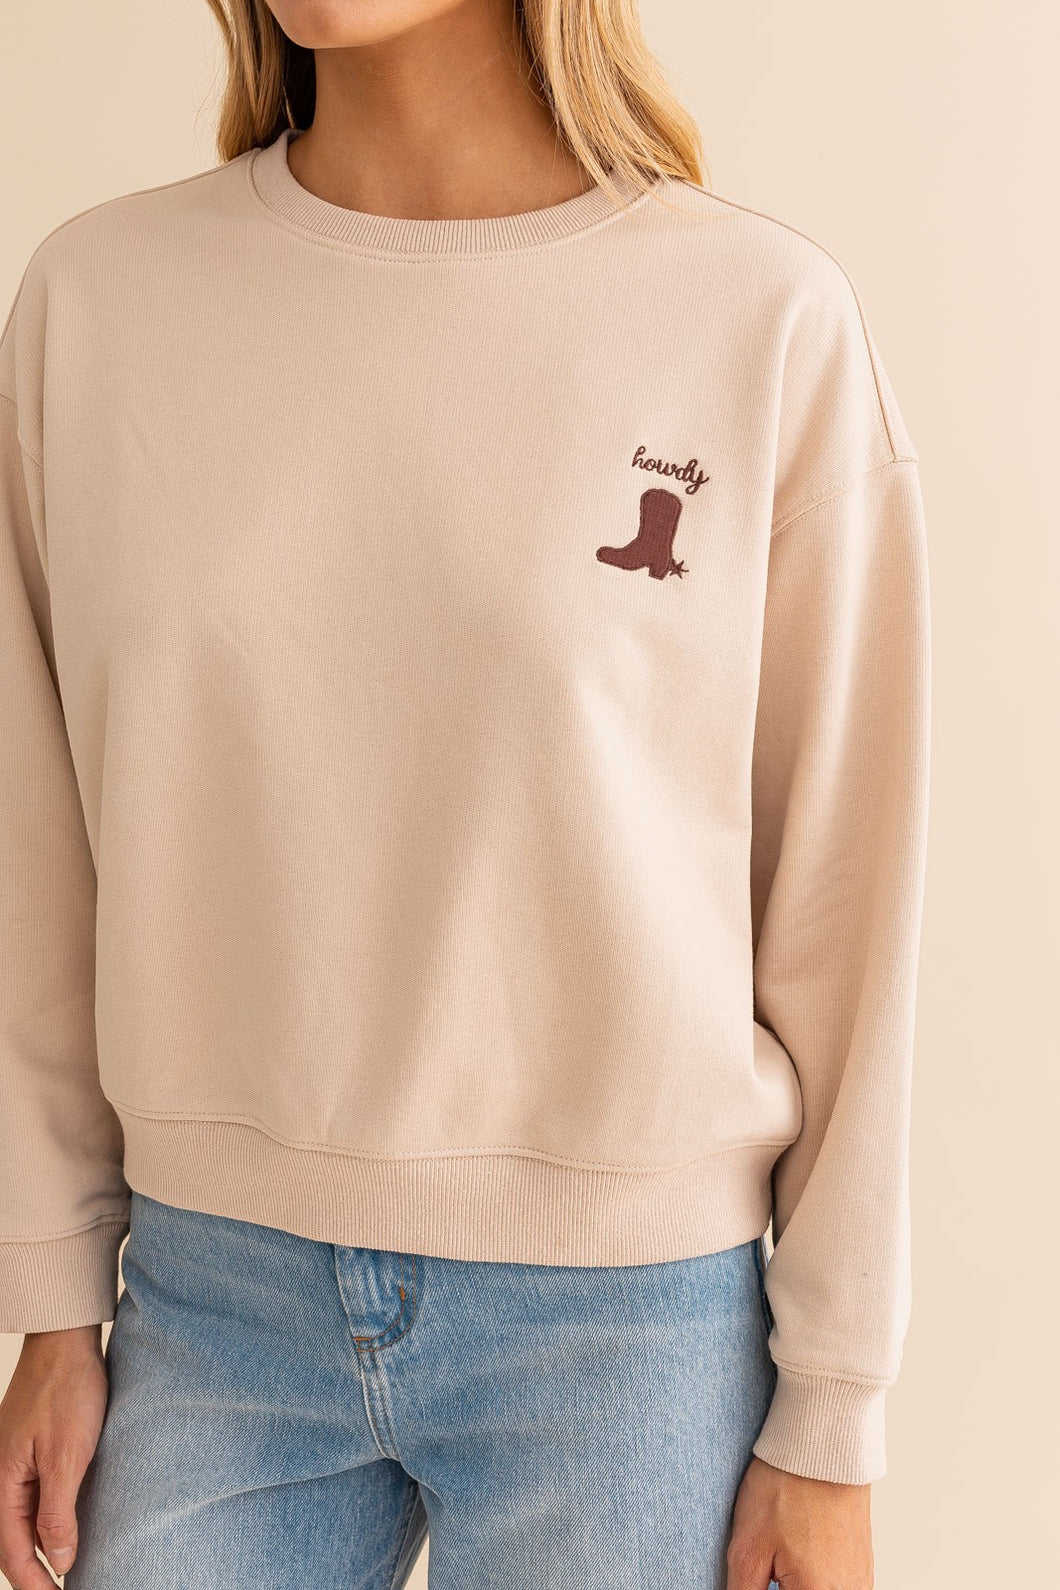 Howdy Embroidered Sweatshirt